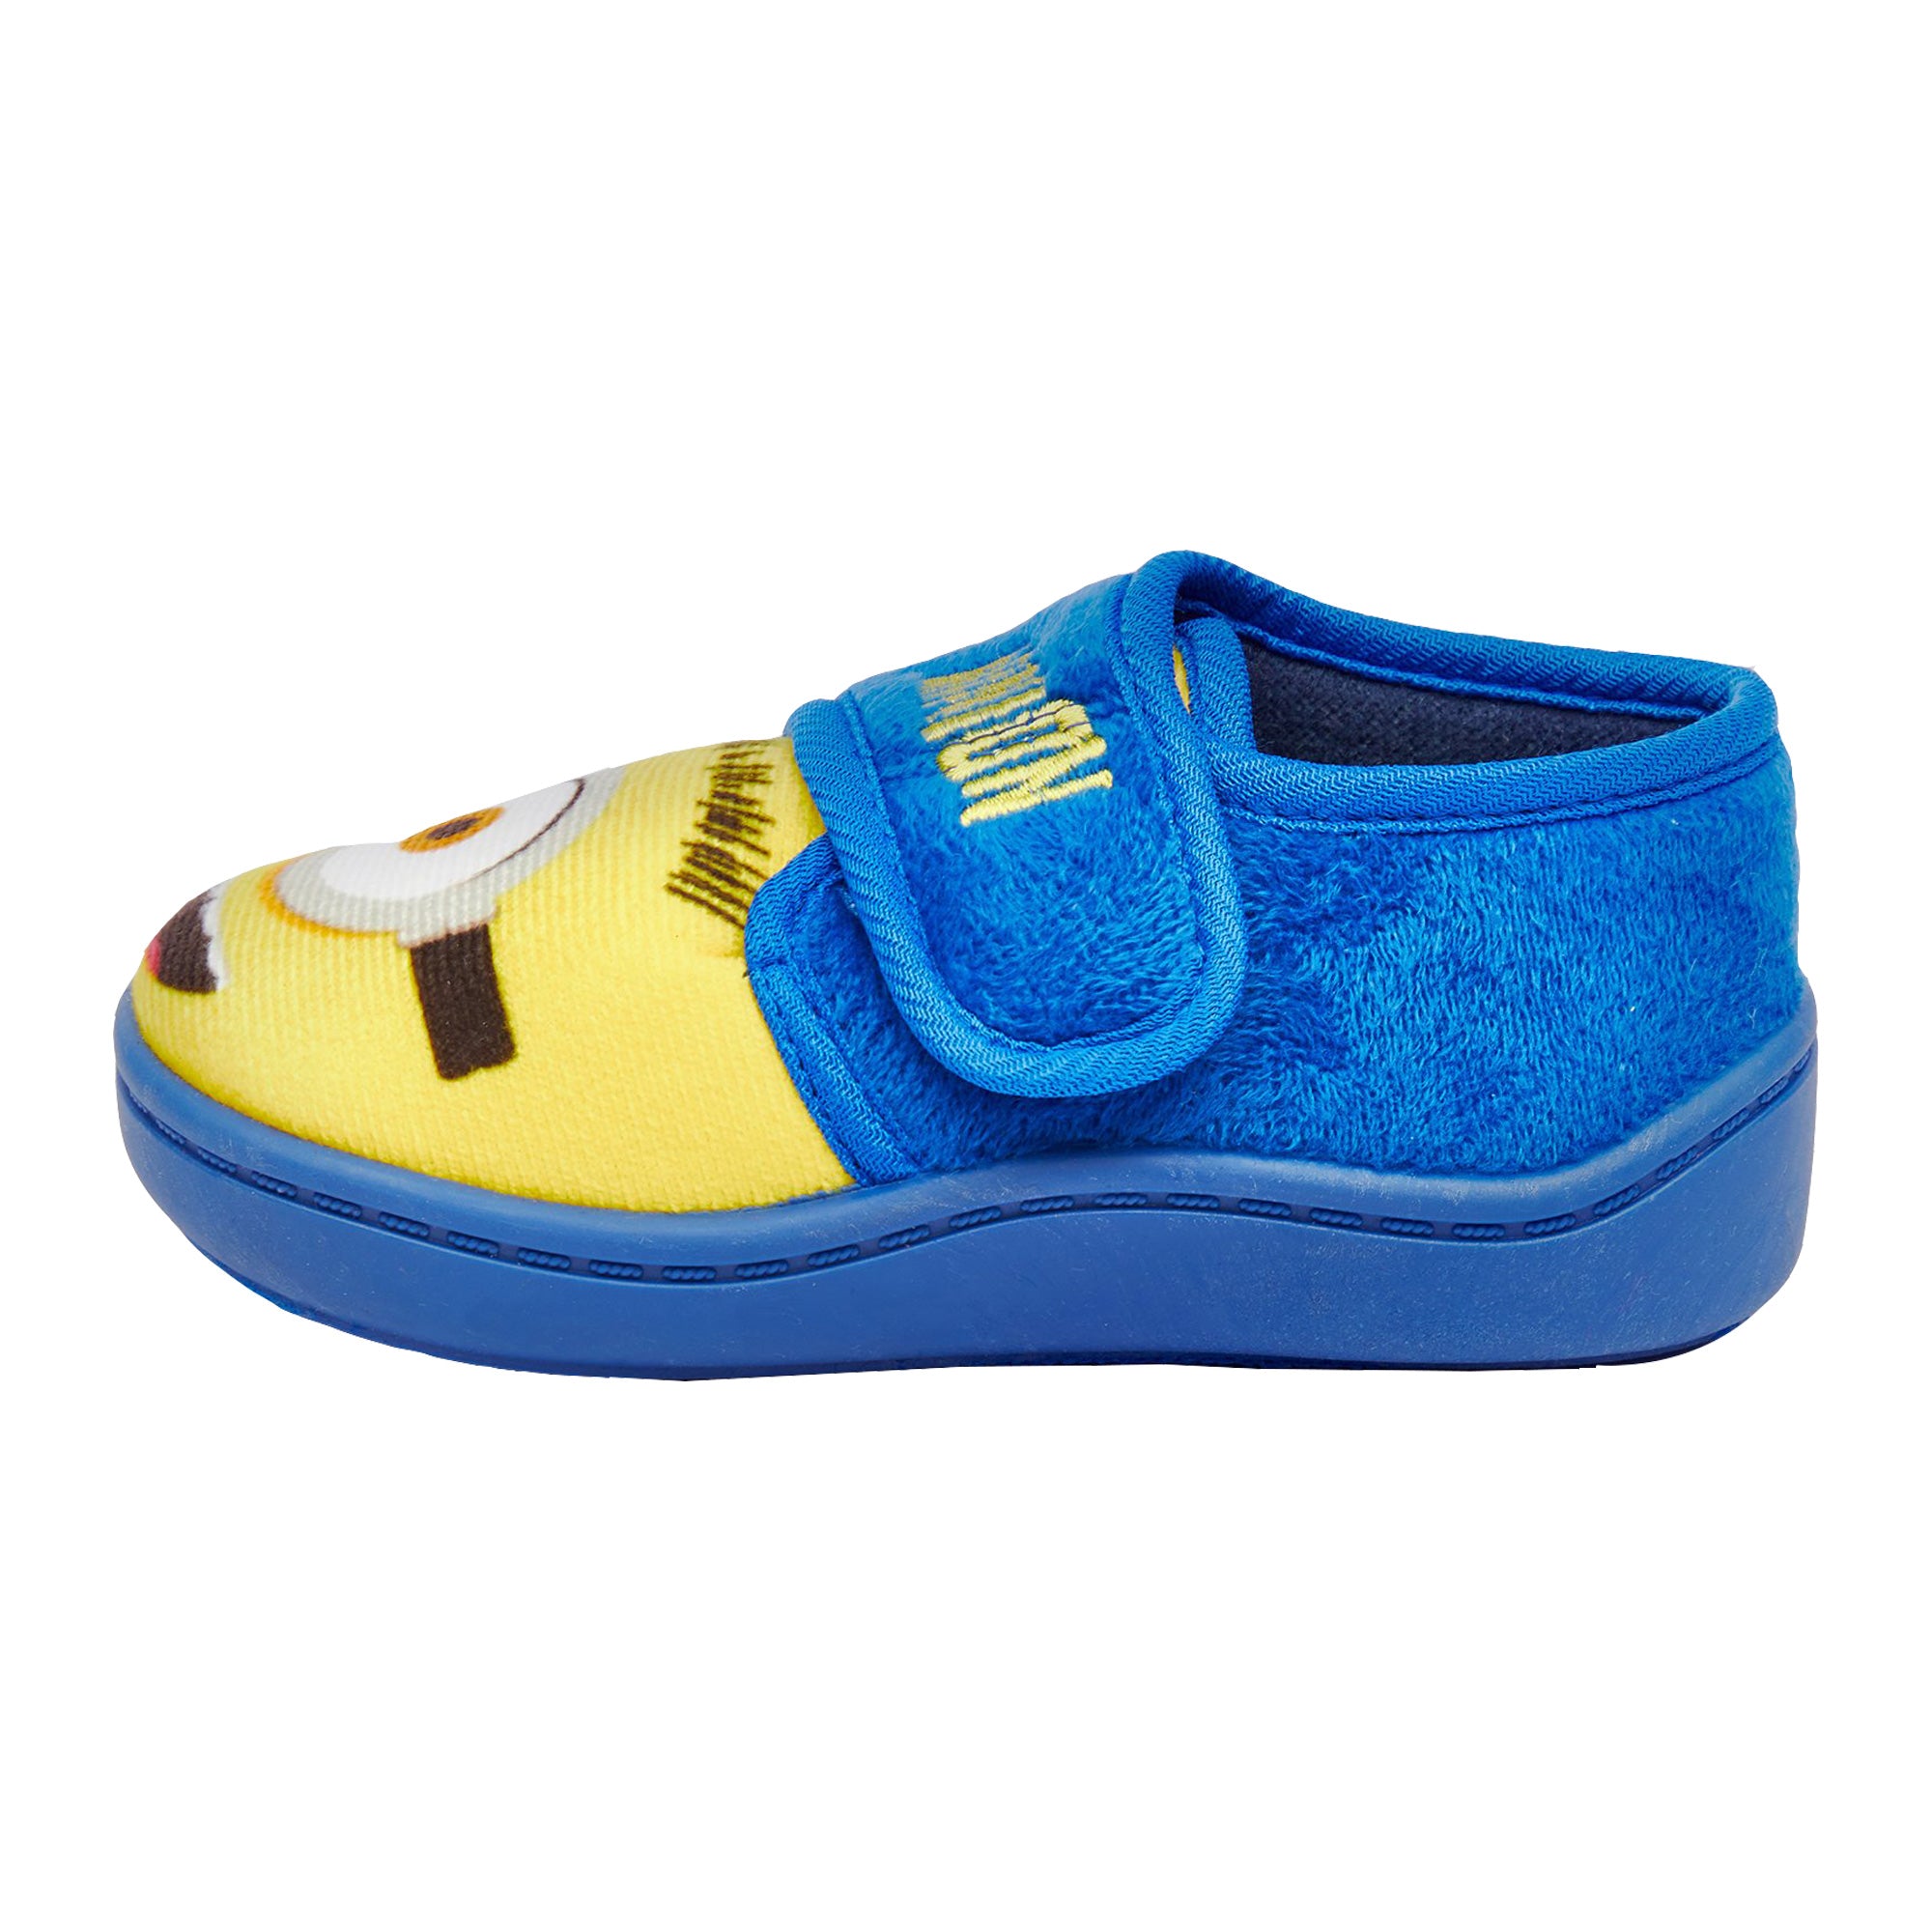 Minions Shoes for Boys 2T-5T | Mercari